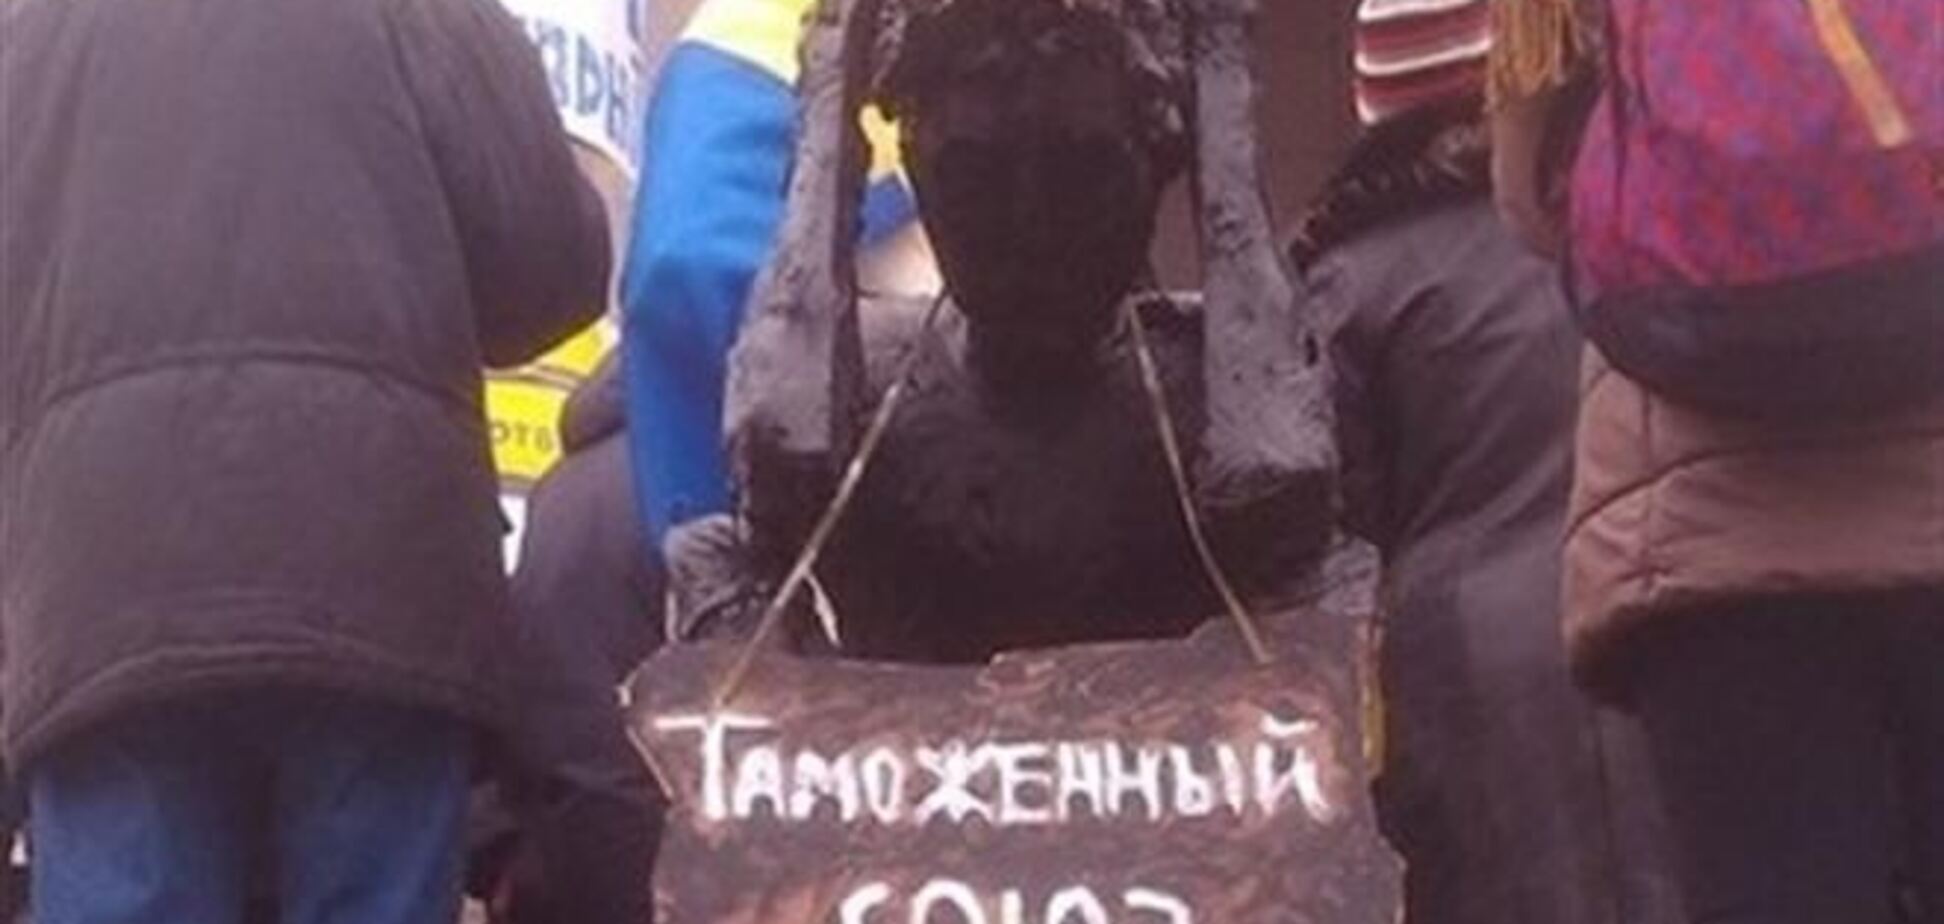 На Майдане появилась скульптура 'Таможенный союз'